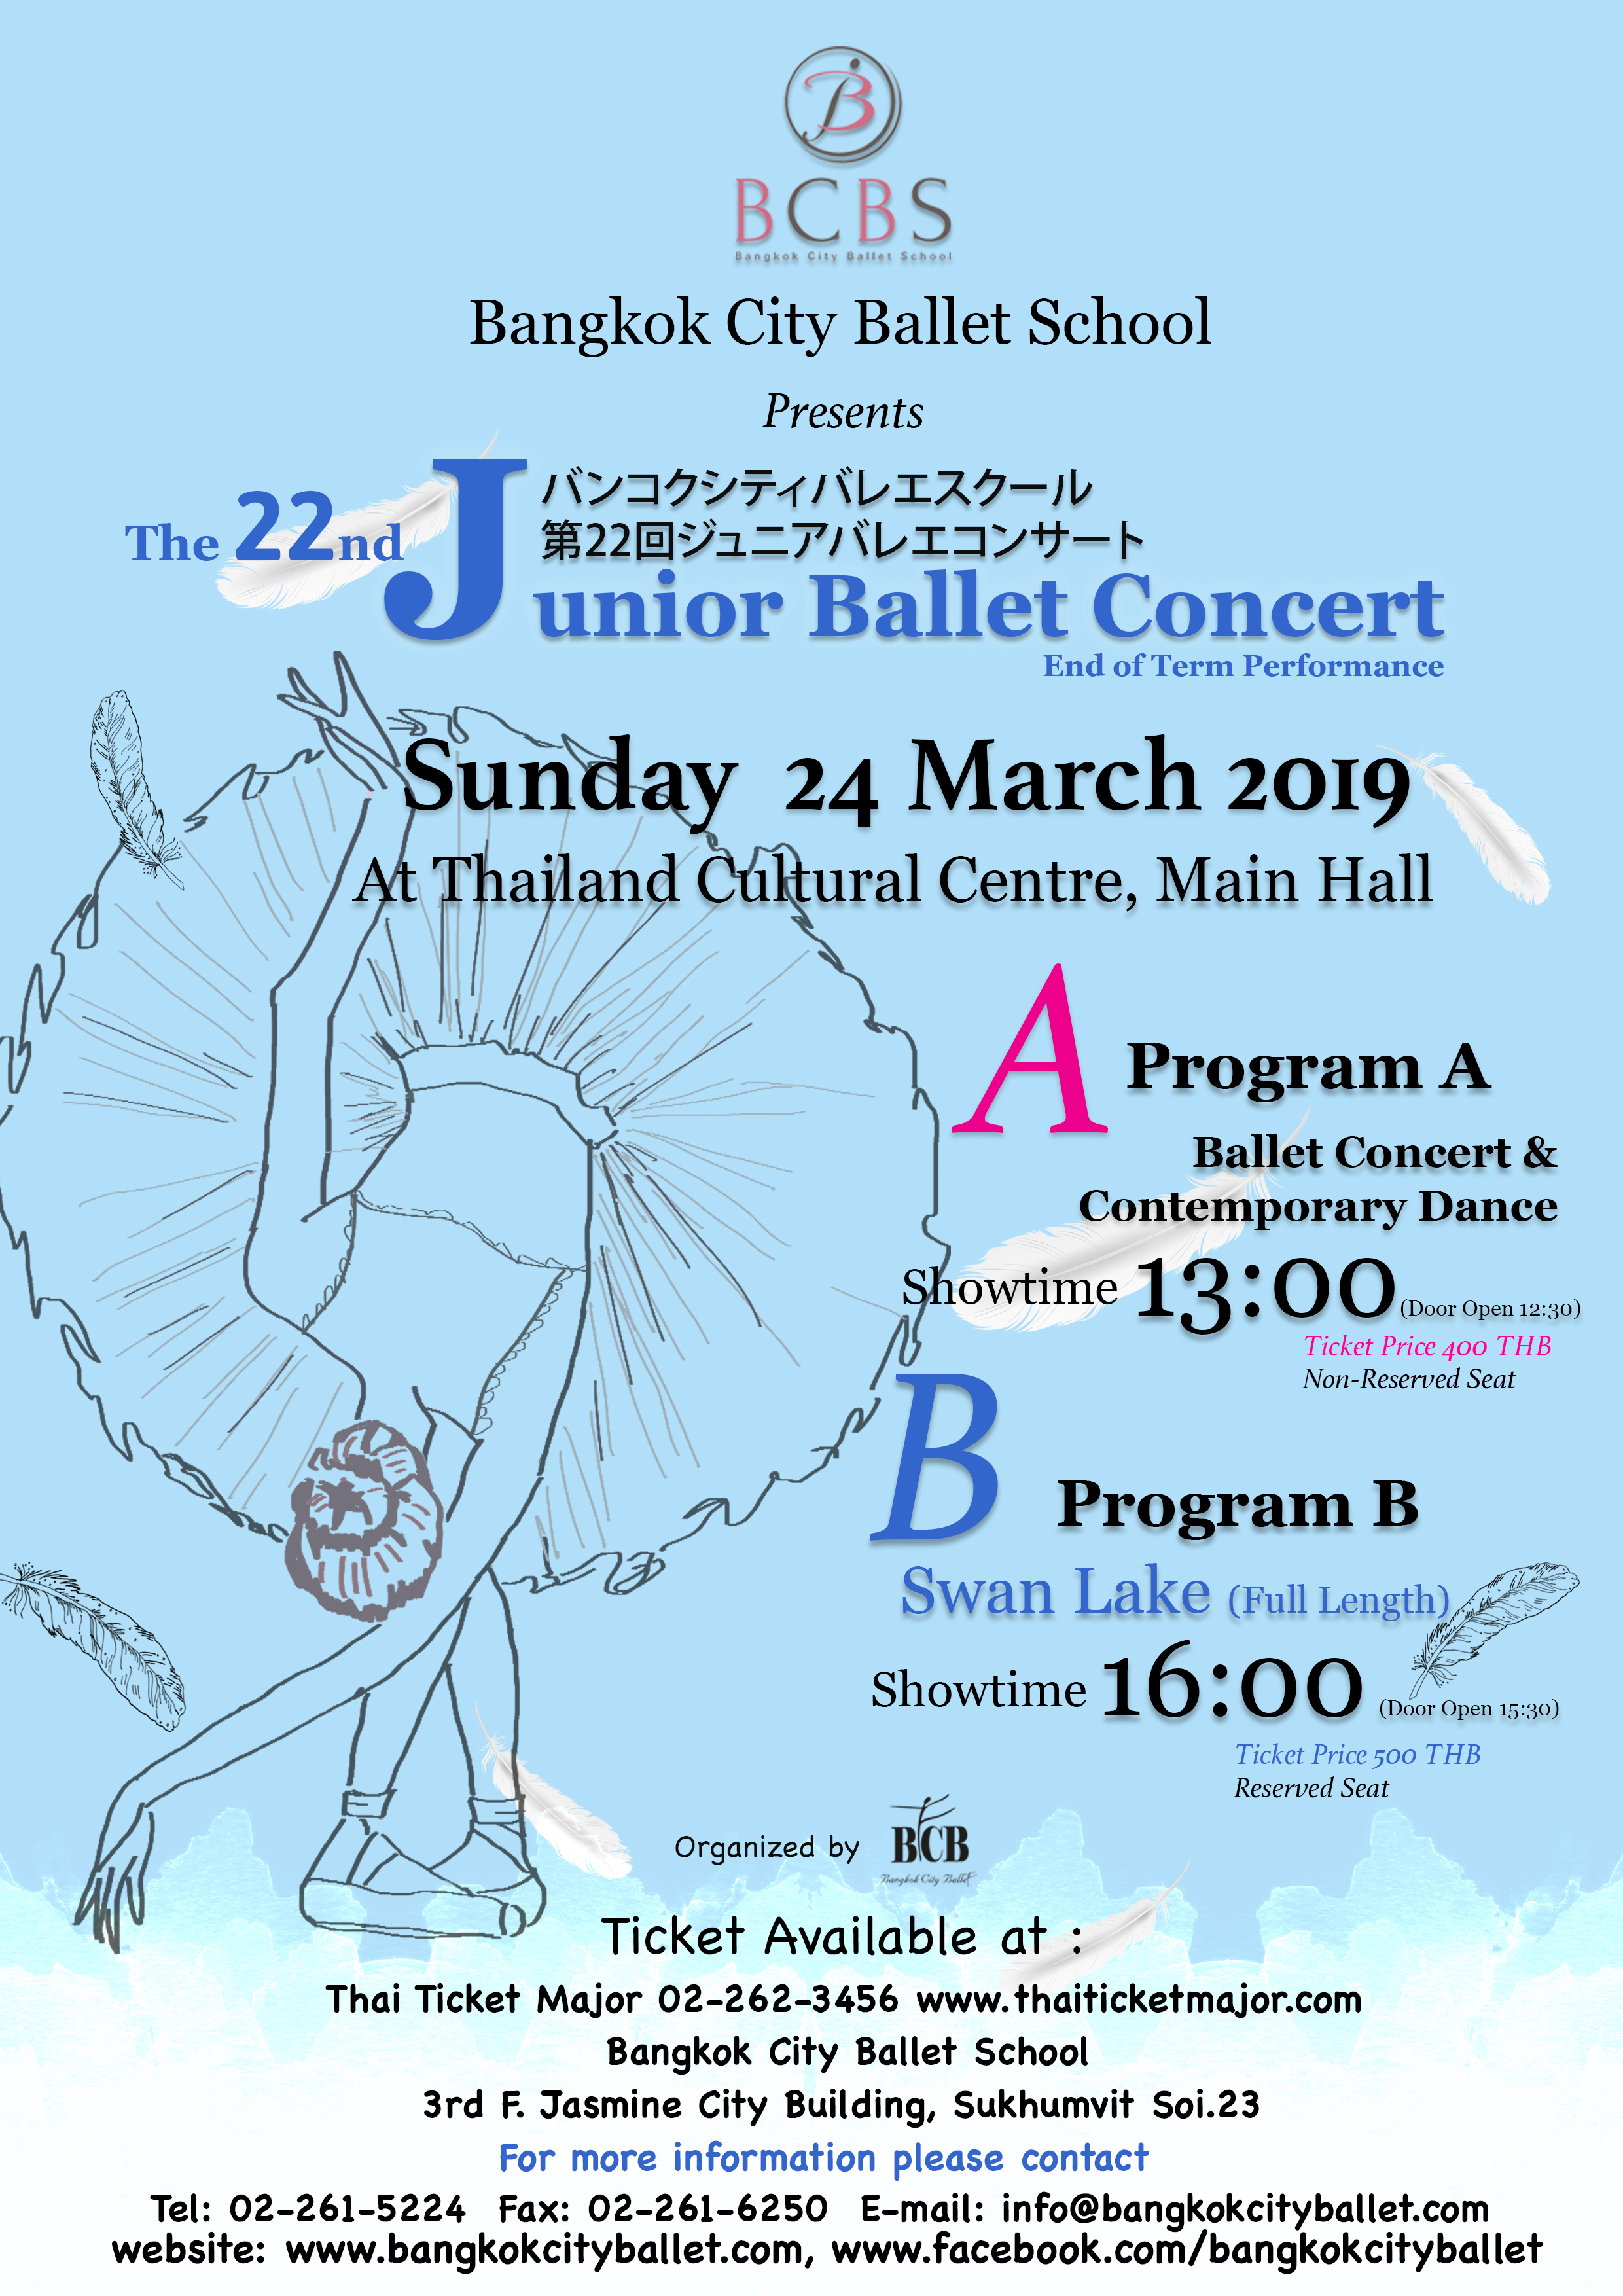 The 22nd Junior Ballet Concert by Bangkok City Ballet School